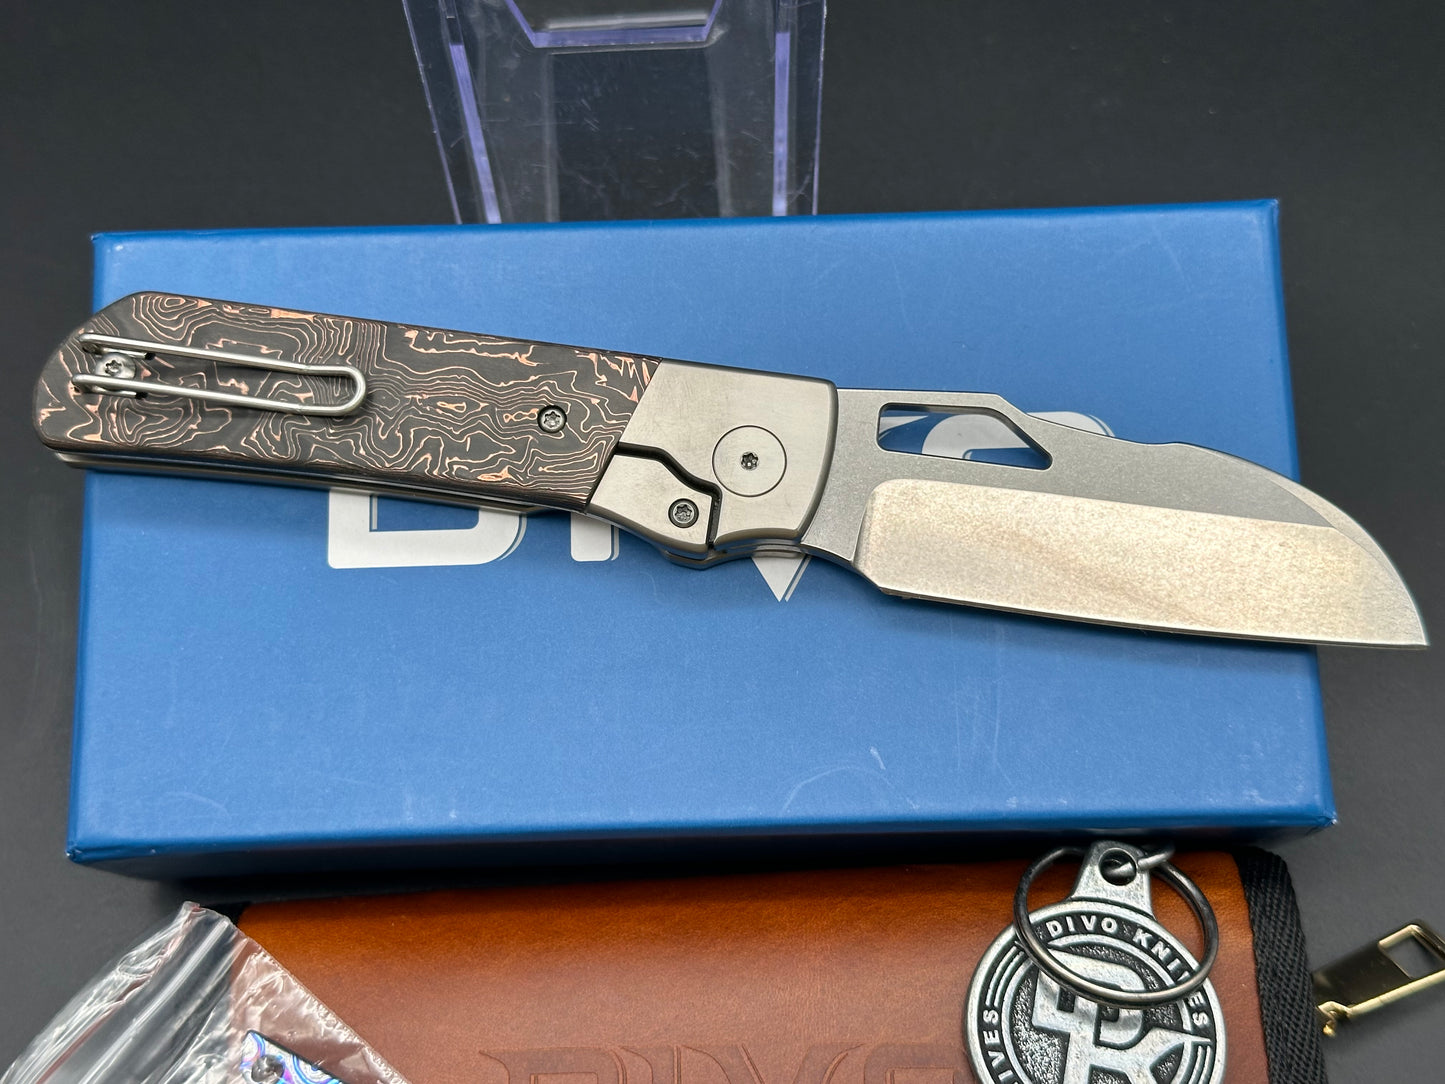 Divo Knives Stout Copper/CF scales titanium frame w/20CV blade & timascus back spacer